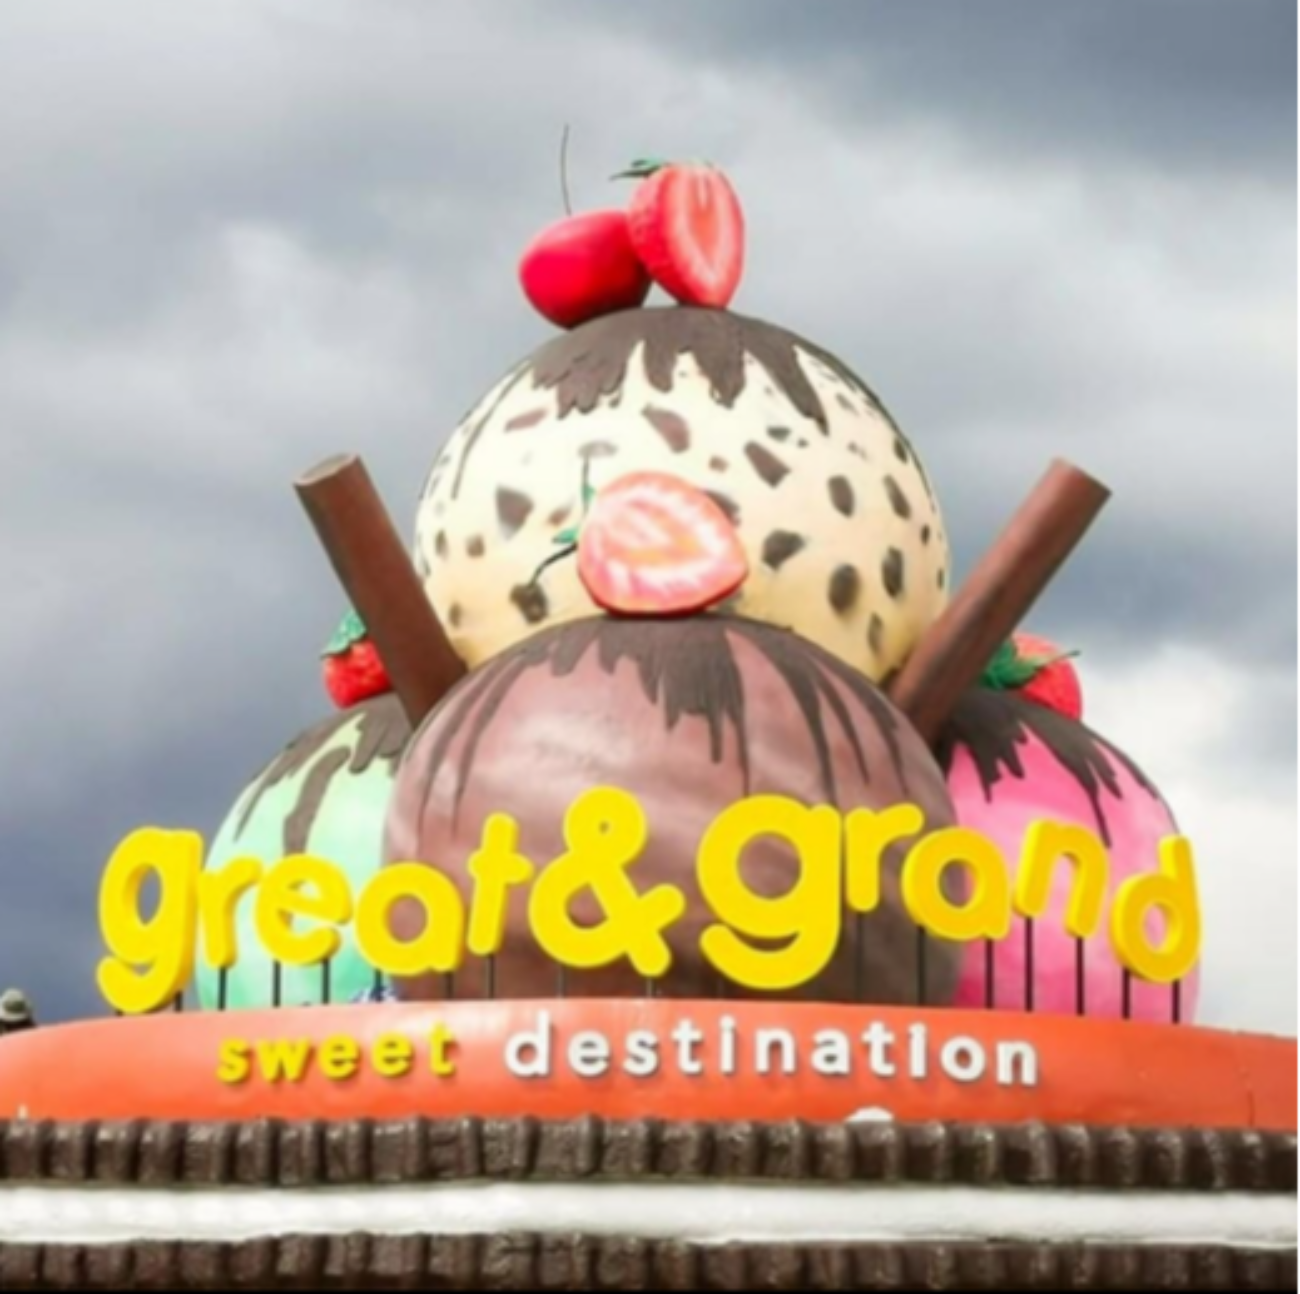 Destinasi wisata manis 'Great & Grand Sweet Destination' di Chonburi, Pattaya, Thailand. (Foto: Instagram @great_grandsweetdestination)